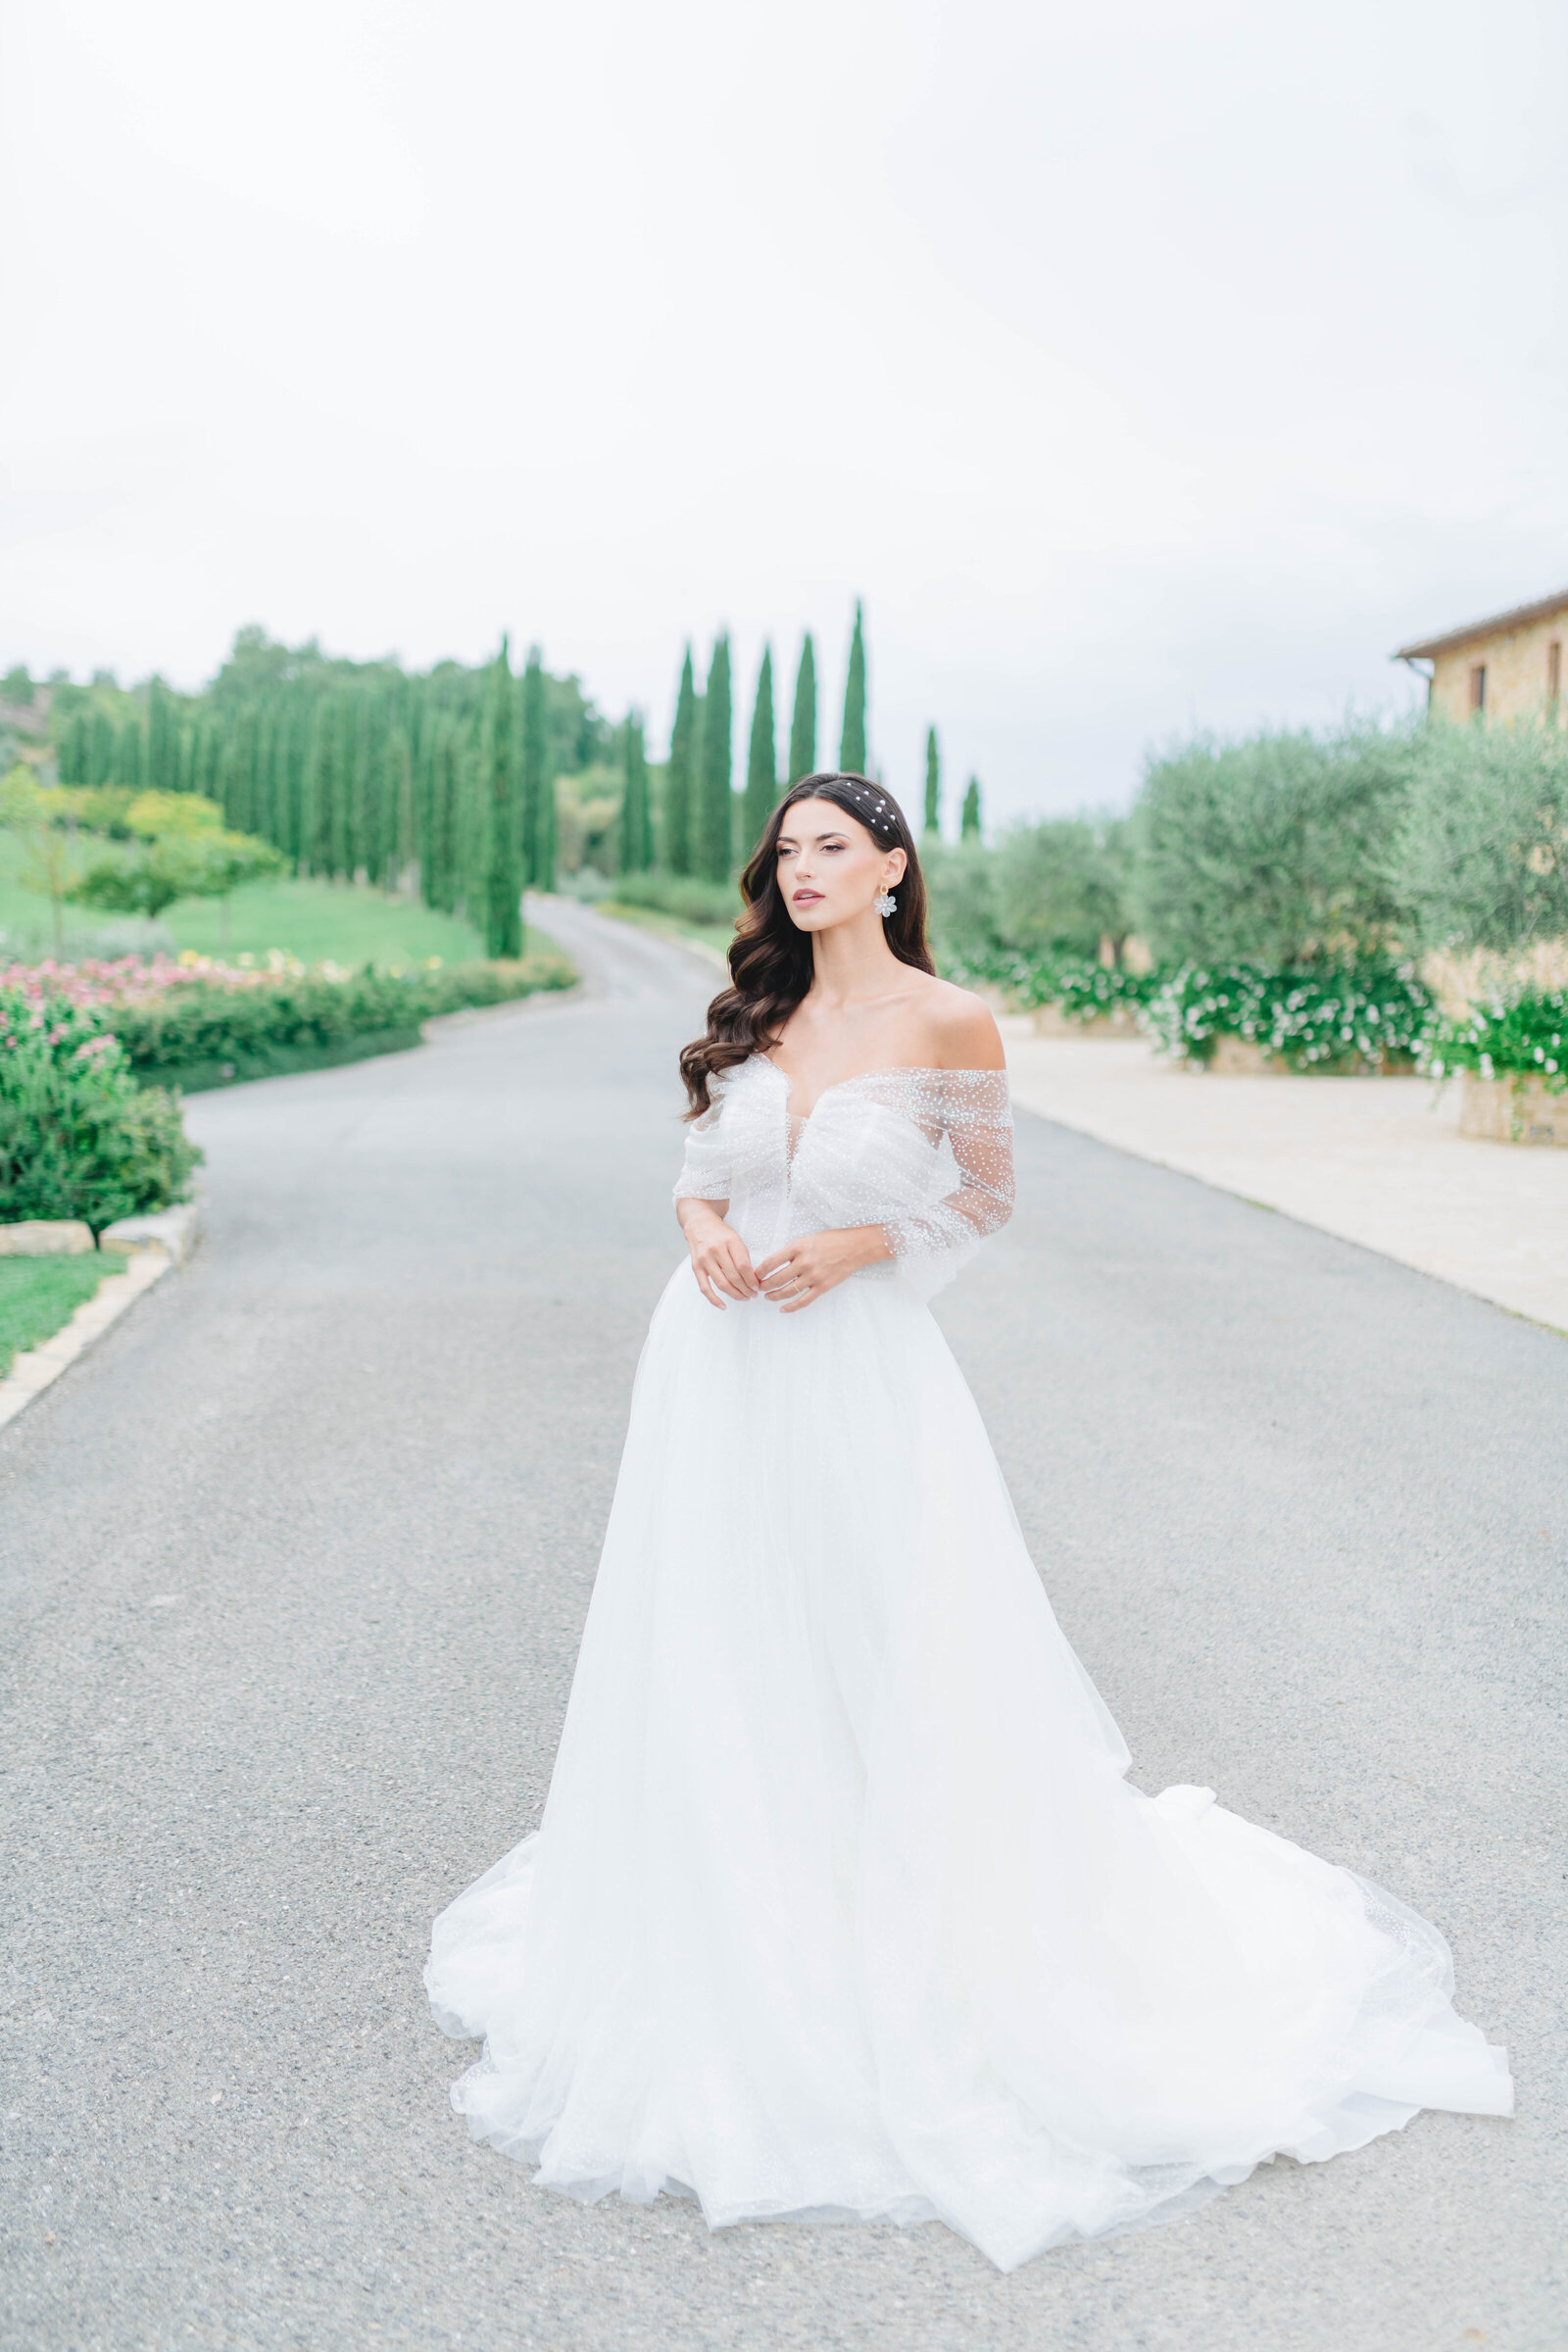 MorganeBallPhotography-Wedding-Tuscany-TheClubHouse-LovelyInstants-03-WeddingCeremony-bride-lq-91-3735